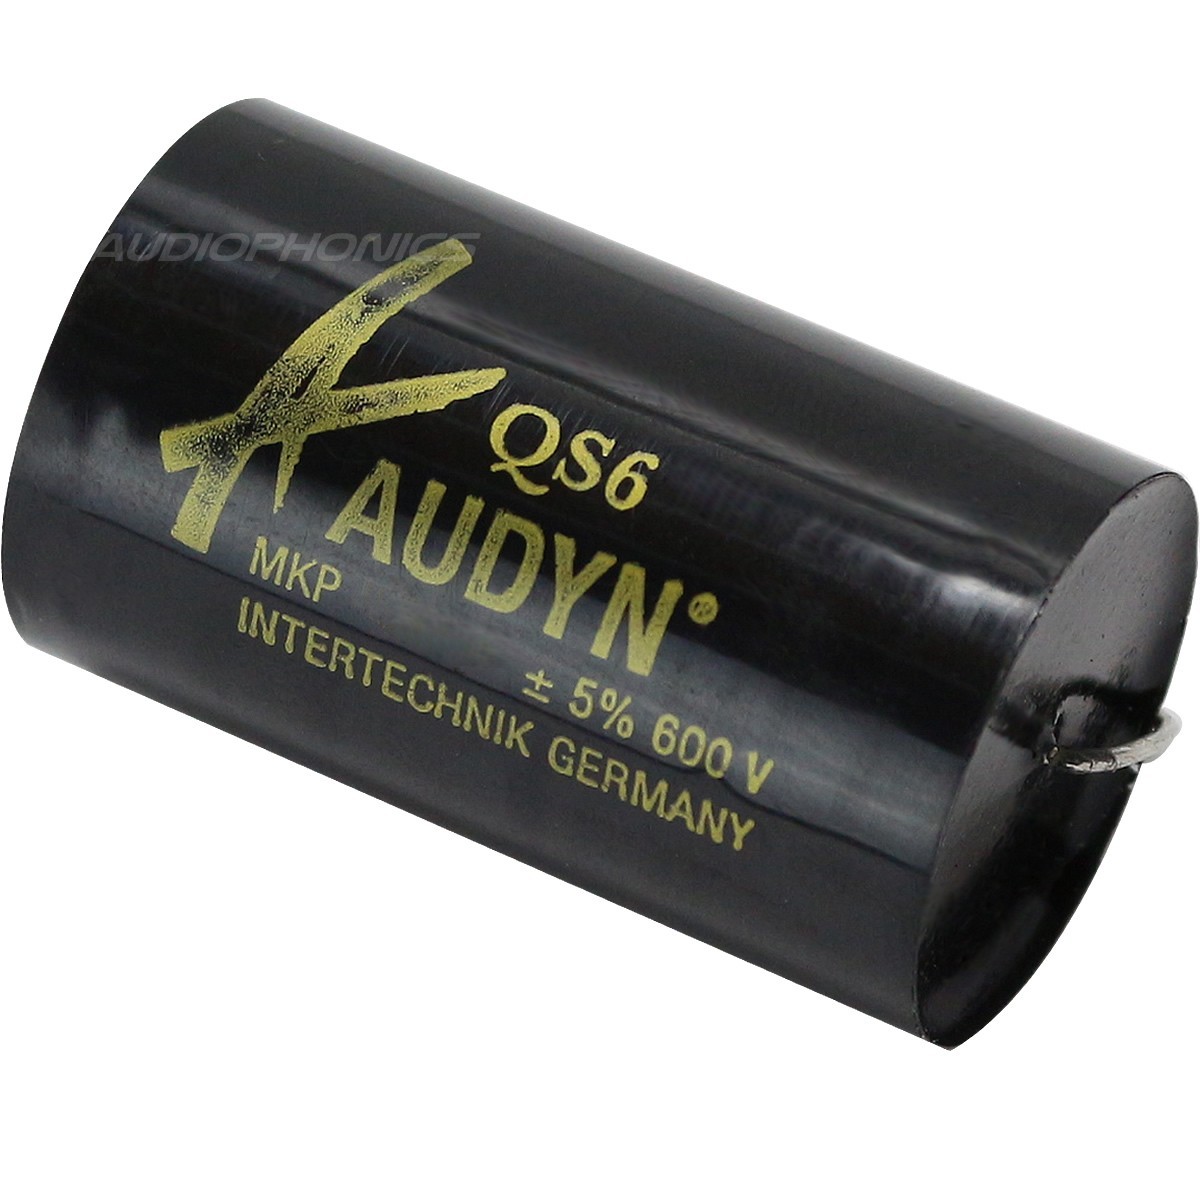 AUDYN CAP QS6 Condensateur MKP 600V 8.2µF